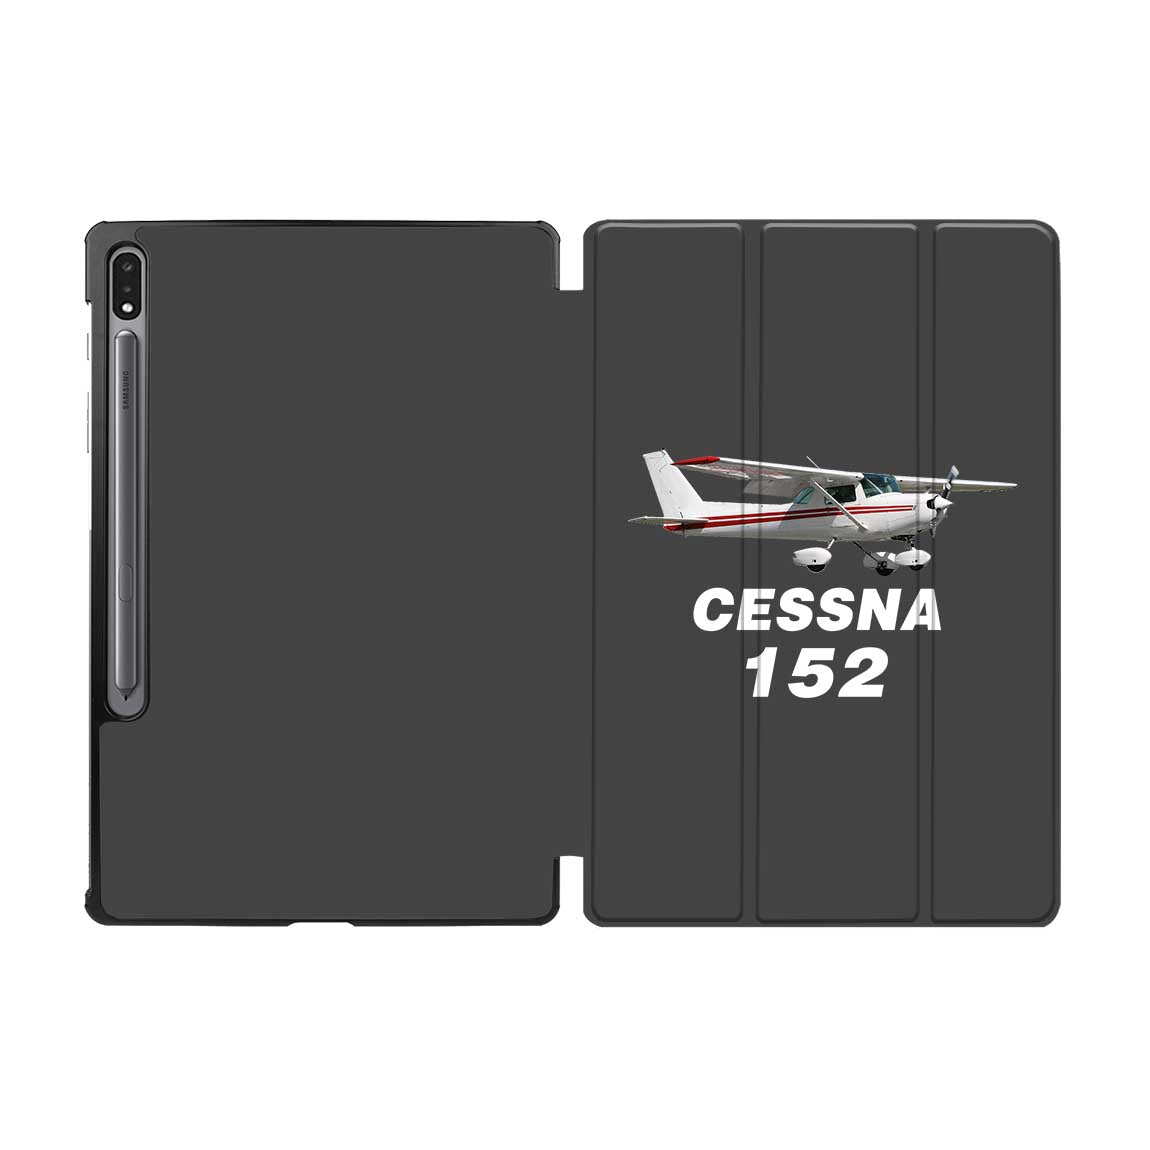 The Cessna 152 Designed Samsung Tablet Cases